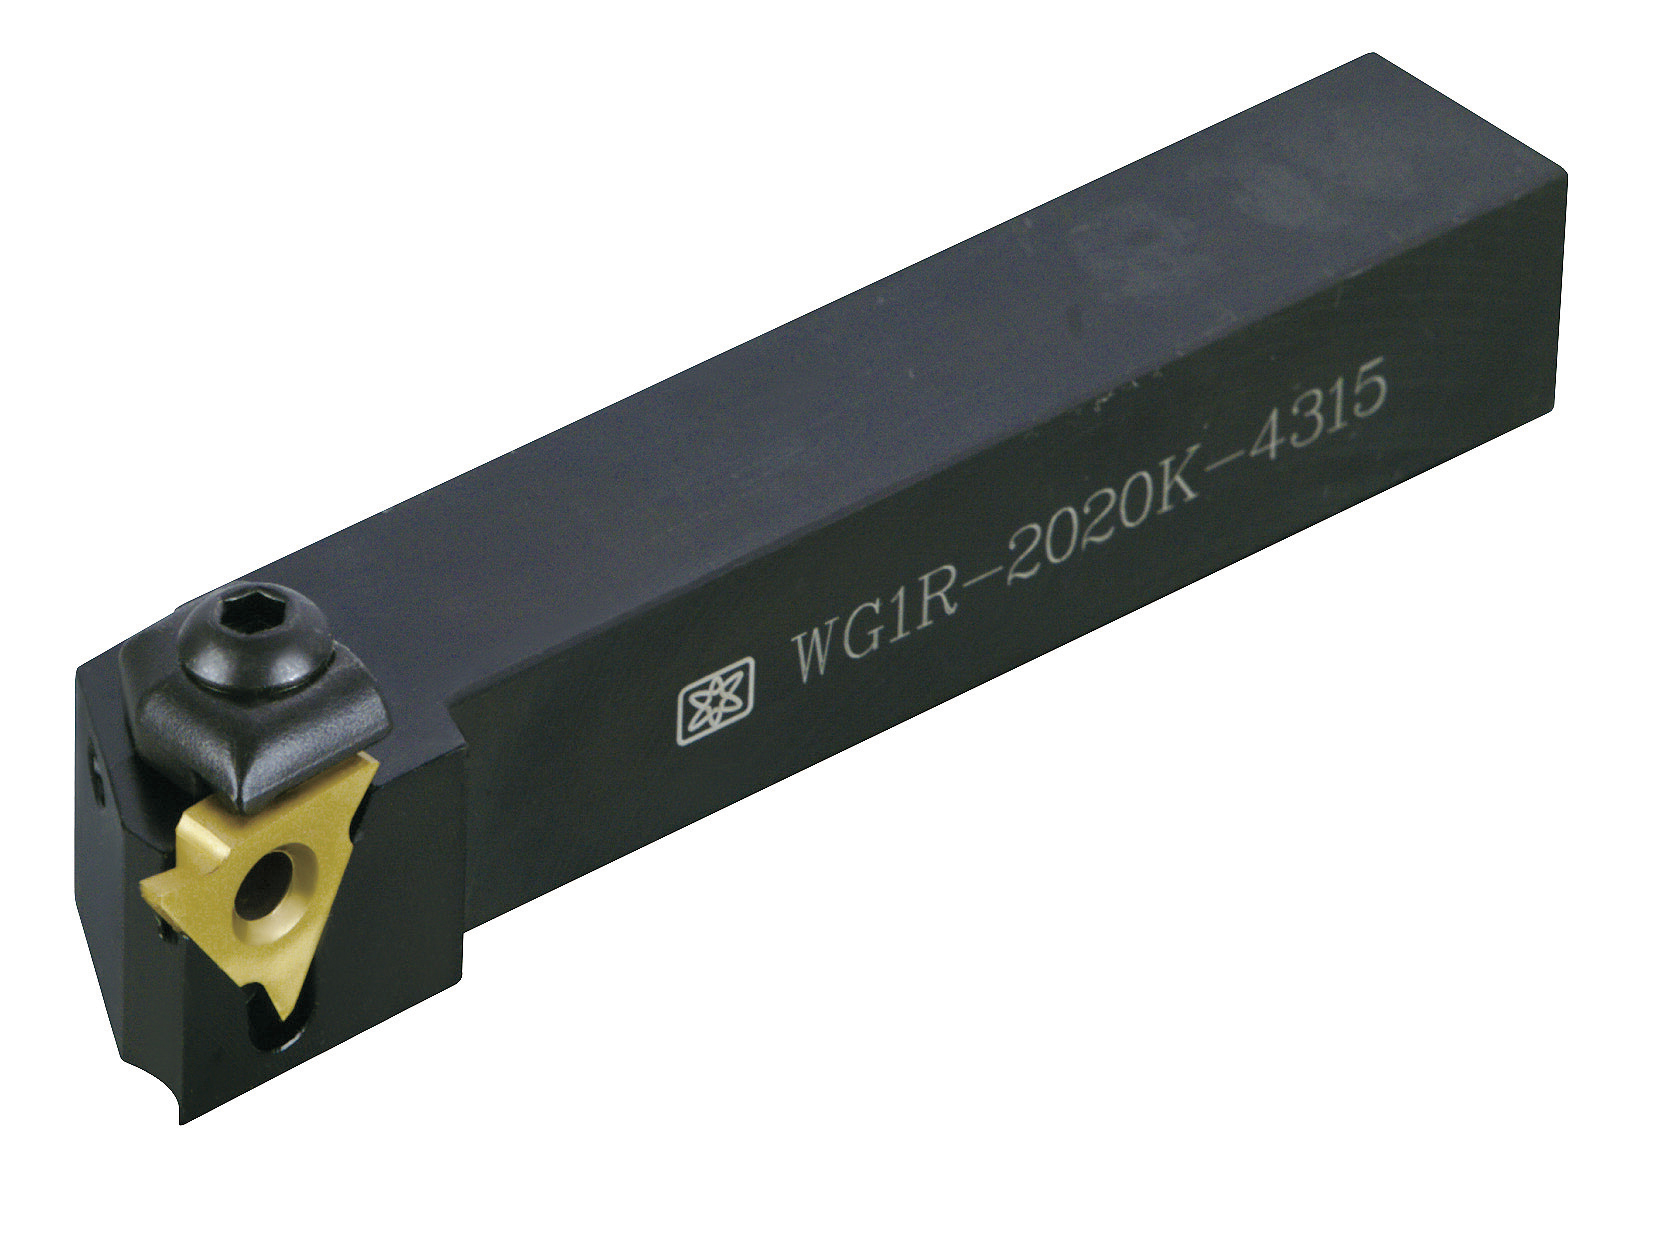 Catalog|WG1R (MGTR33125~33400 / WGTR43125~43470) External Grooving Tool Holder